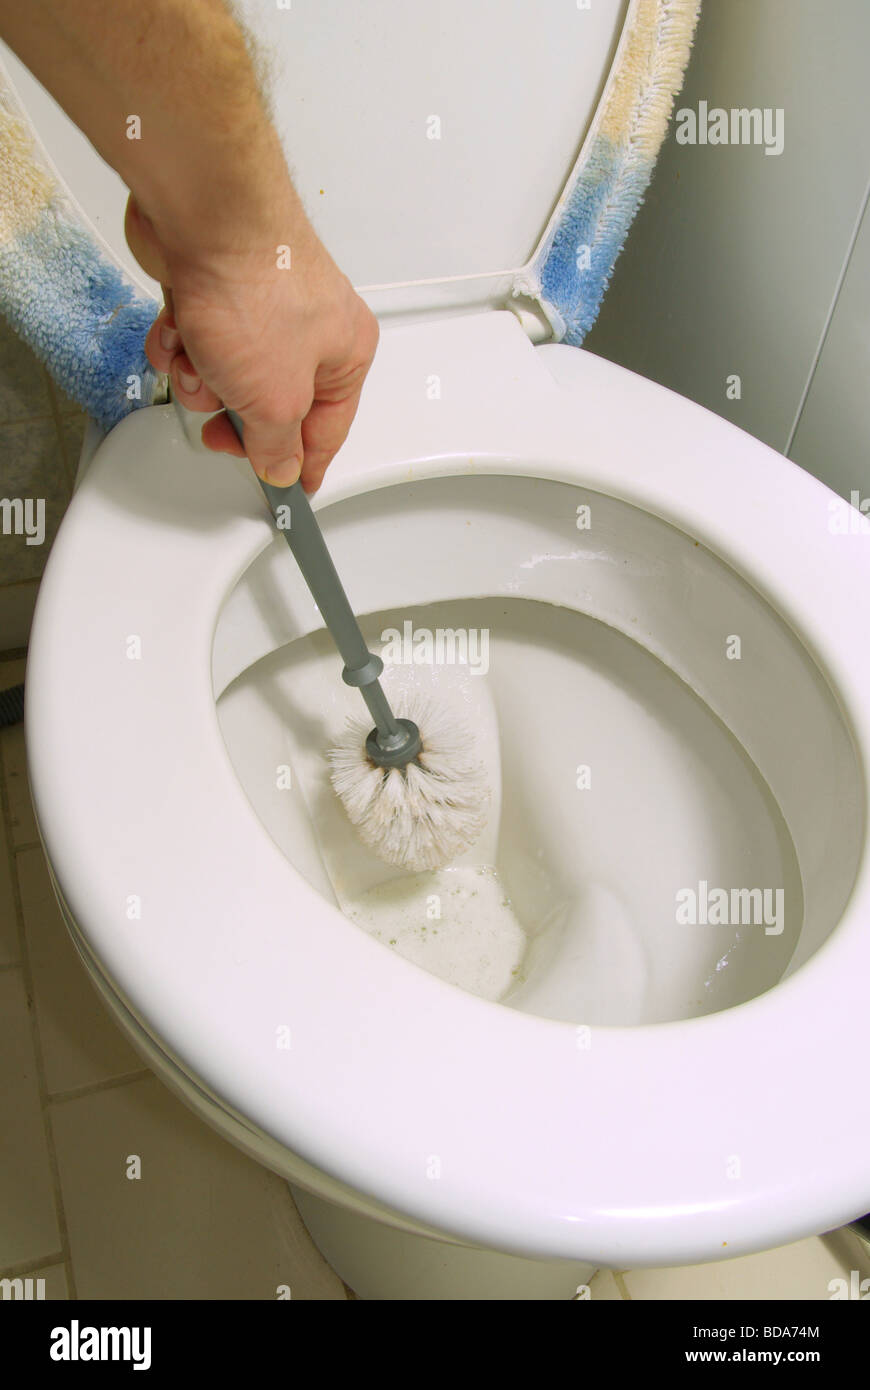 Toilette putzen toilet cleaning 03 Stock Photo